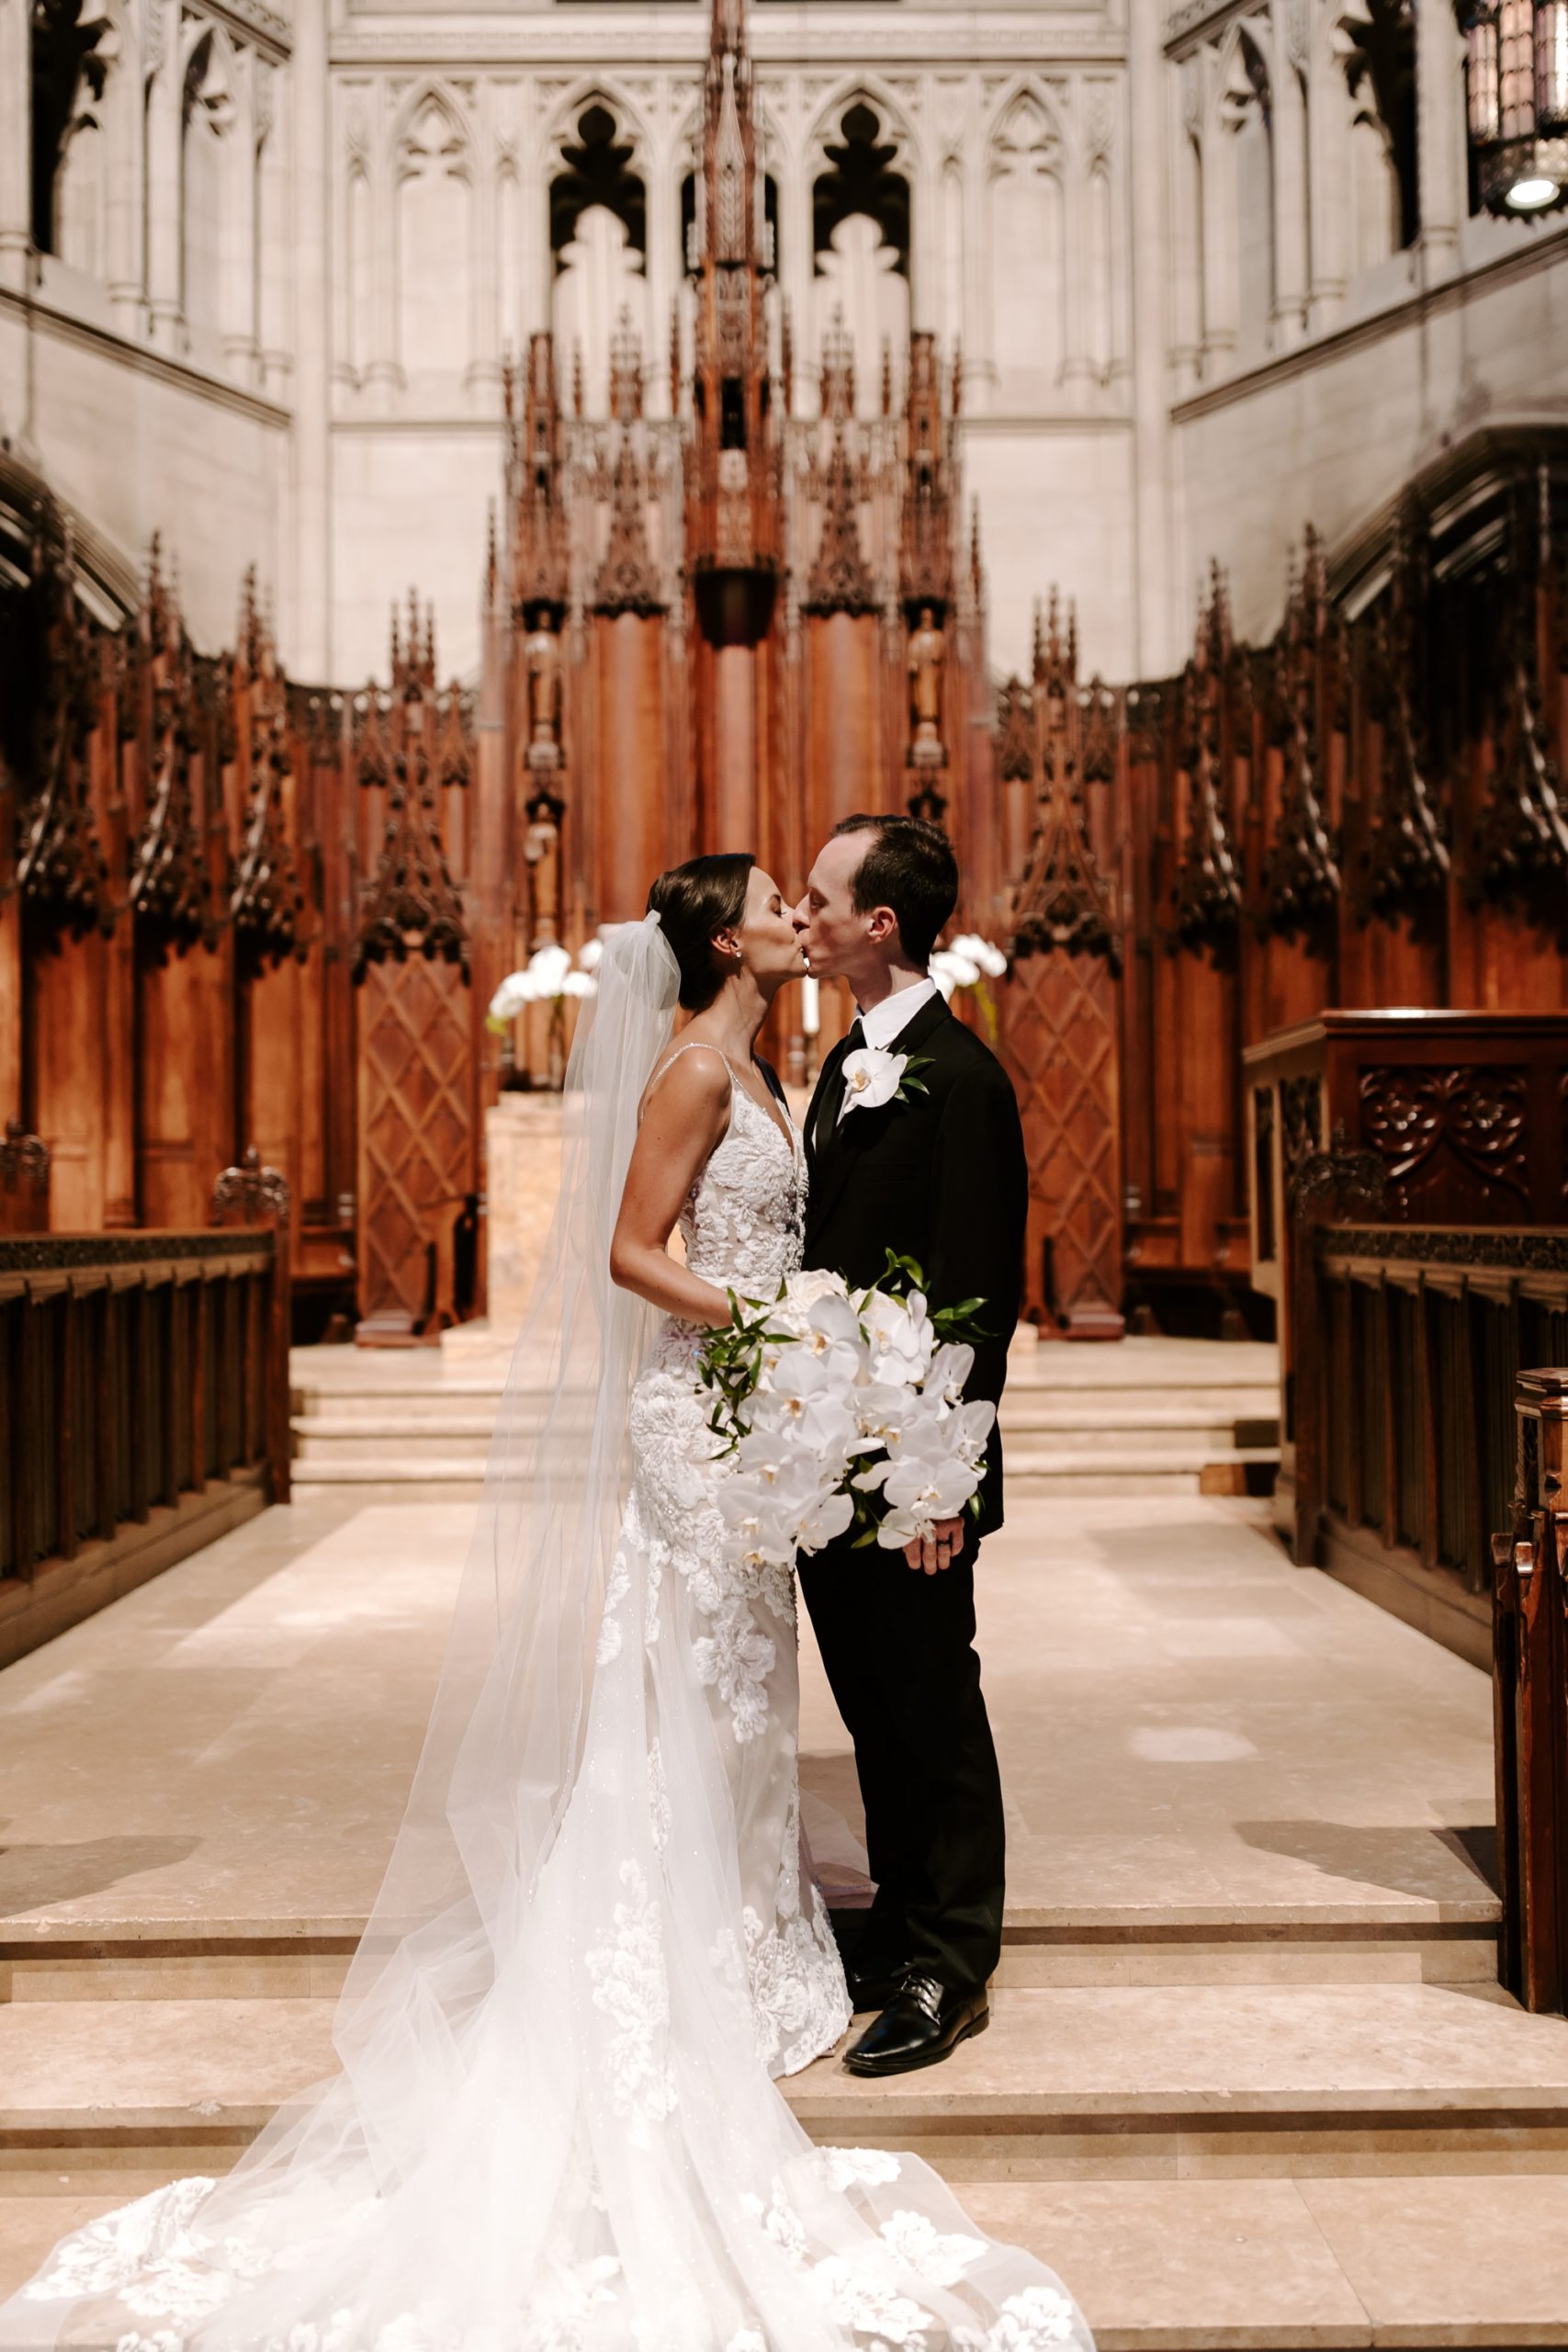 wedding photographer and videographer; Mariah Treiber Photography & Alec James Productions